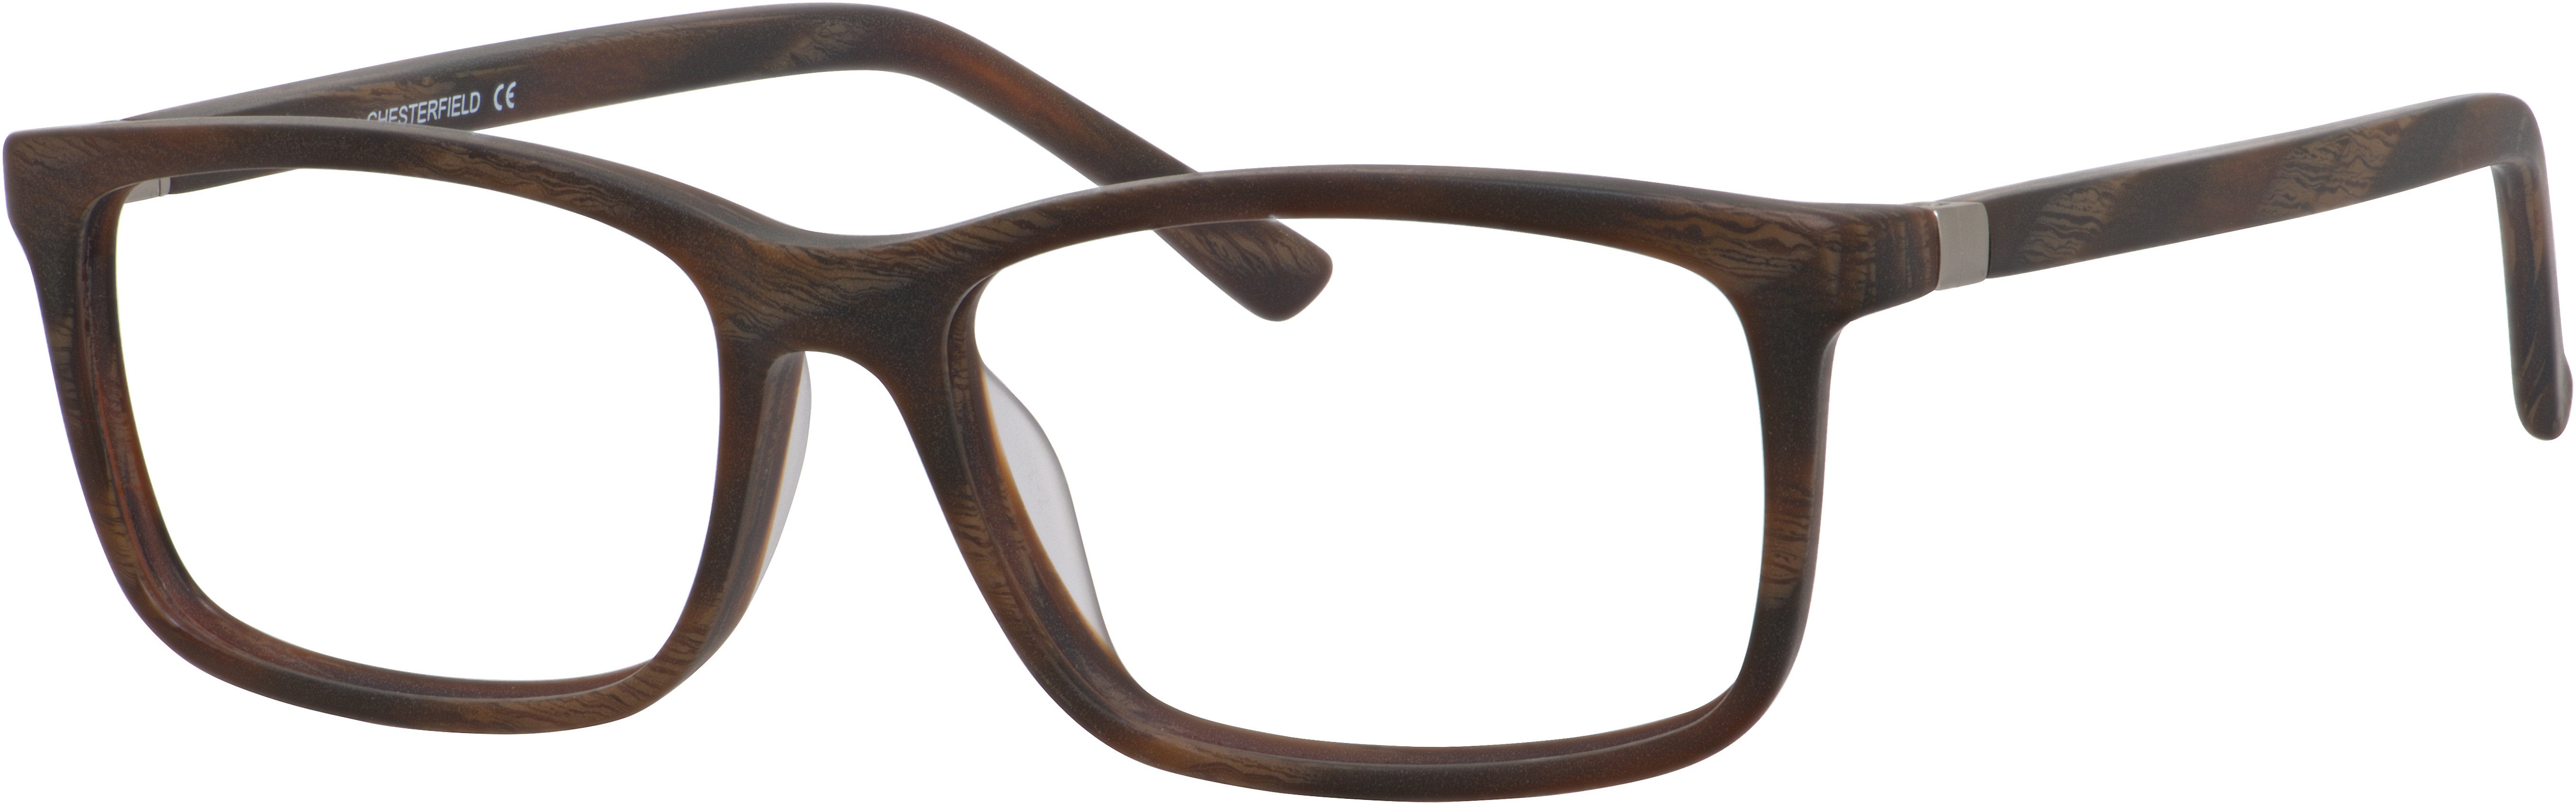  Chesterfield 51/XL Rectangular Eyeglasses 0FZ4-0FZ4  Horn (00 Demo Lens)